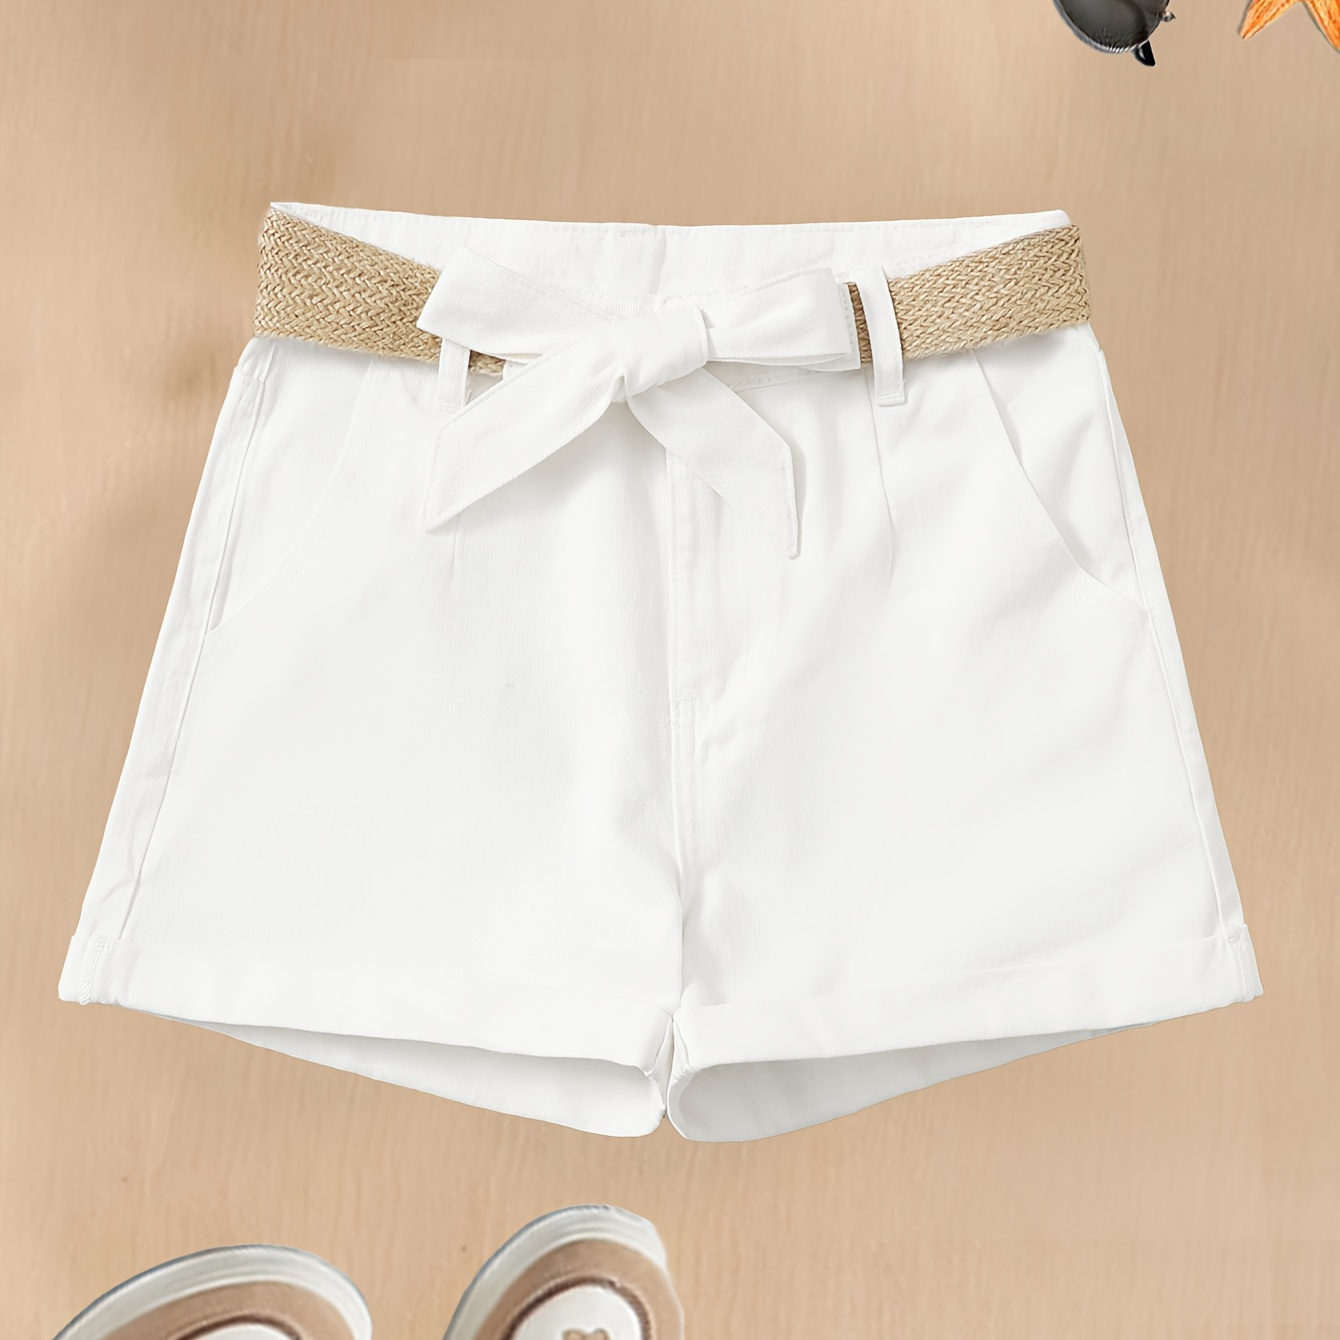 

Women's Bohemian Style White Shorts With Braided Belt, Breathable Fabric, Summer Fashion Beachwear